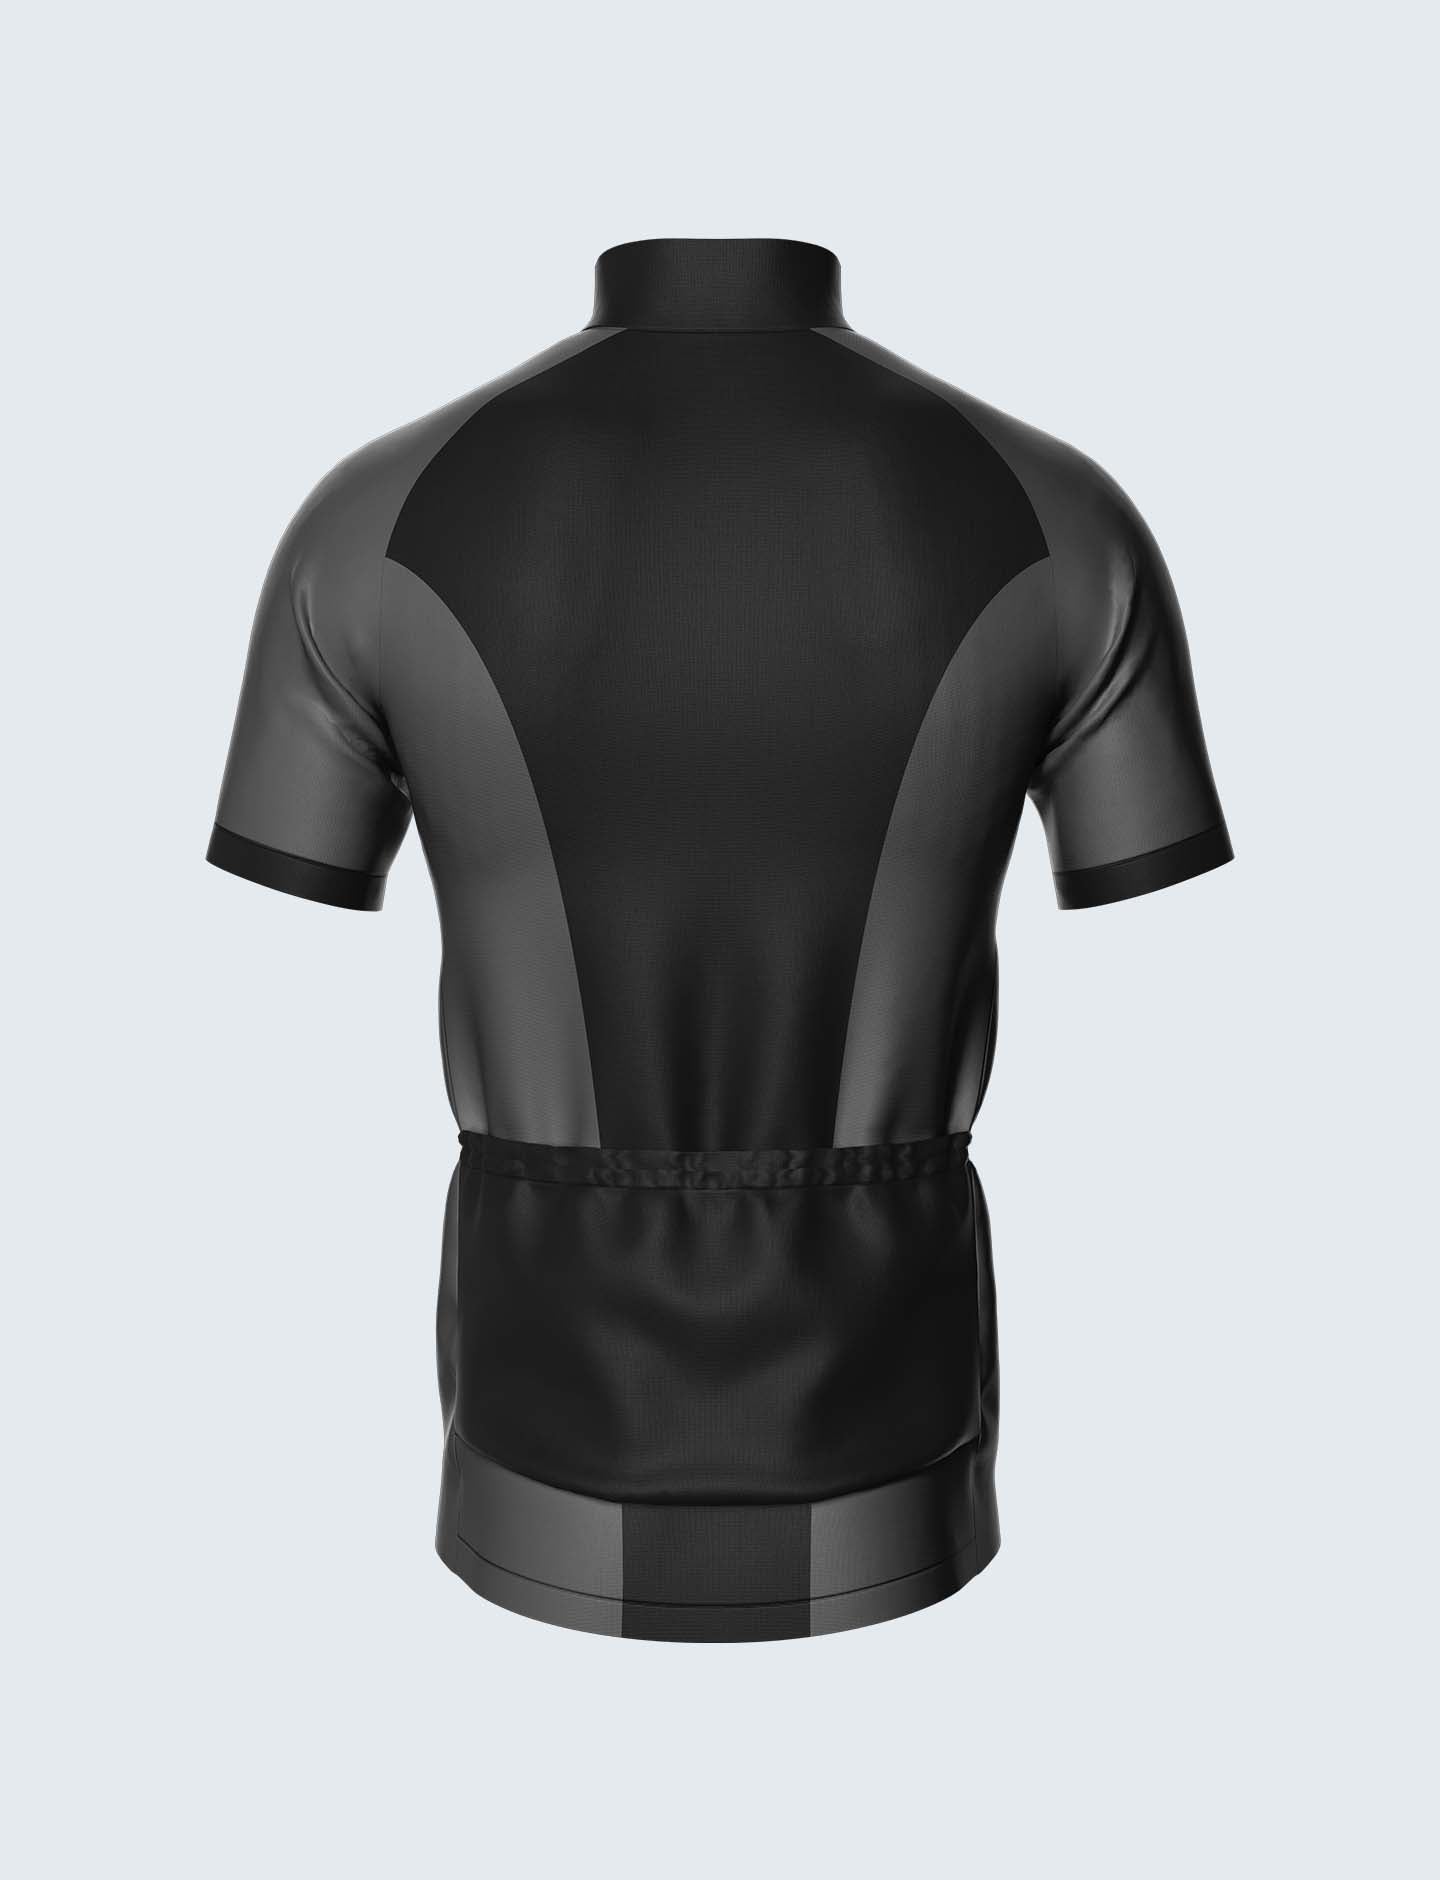 Custom Men's Quarter-Zip Cycling Jersey Black & Grey - 1935BK_CYT